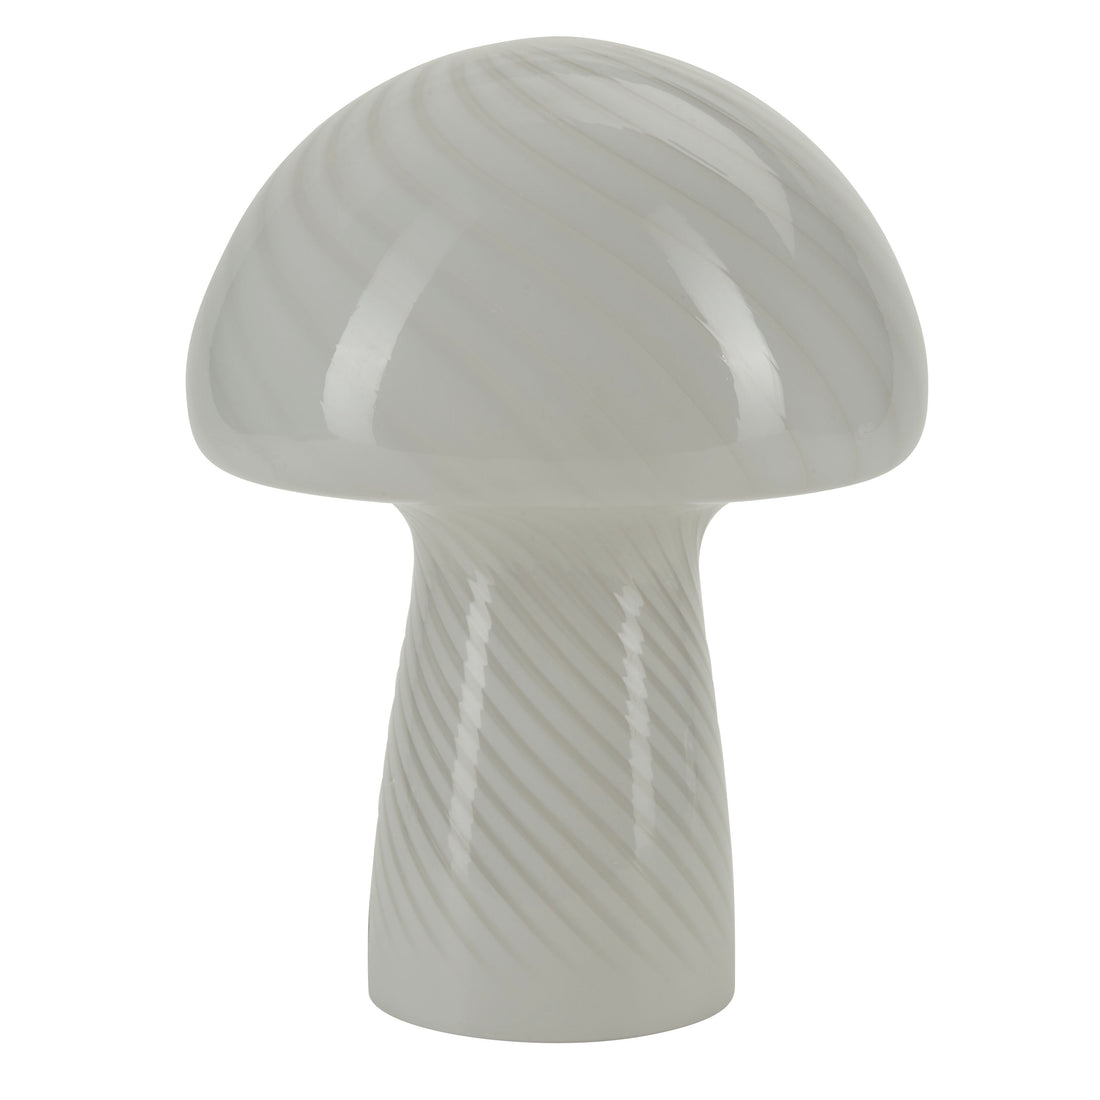 Bahne - Fungal lamp / Mushroom Table lamp, white - H32 cm.